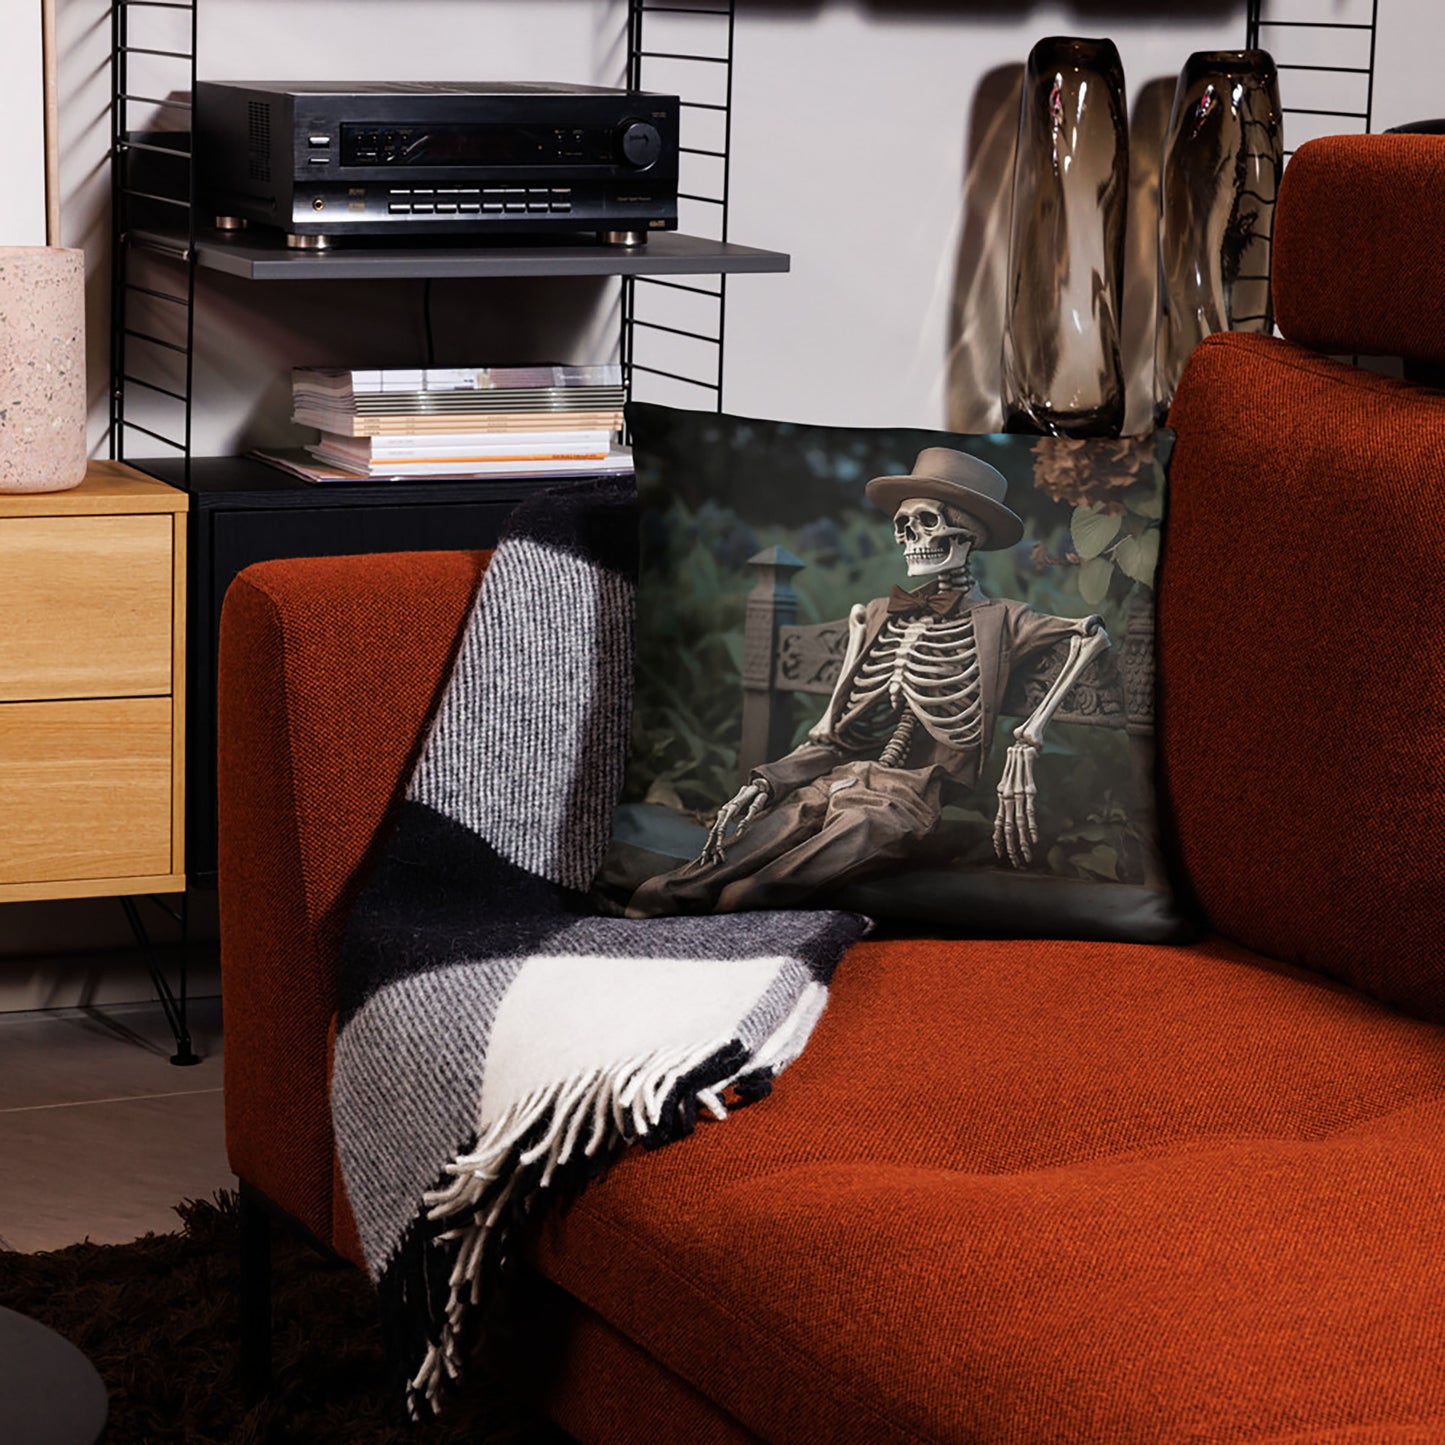 Halloween Throw Pillow Gentleman Skeleton Polyester Decorative Cushion 18x18